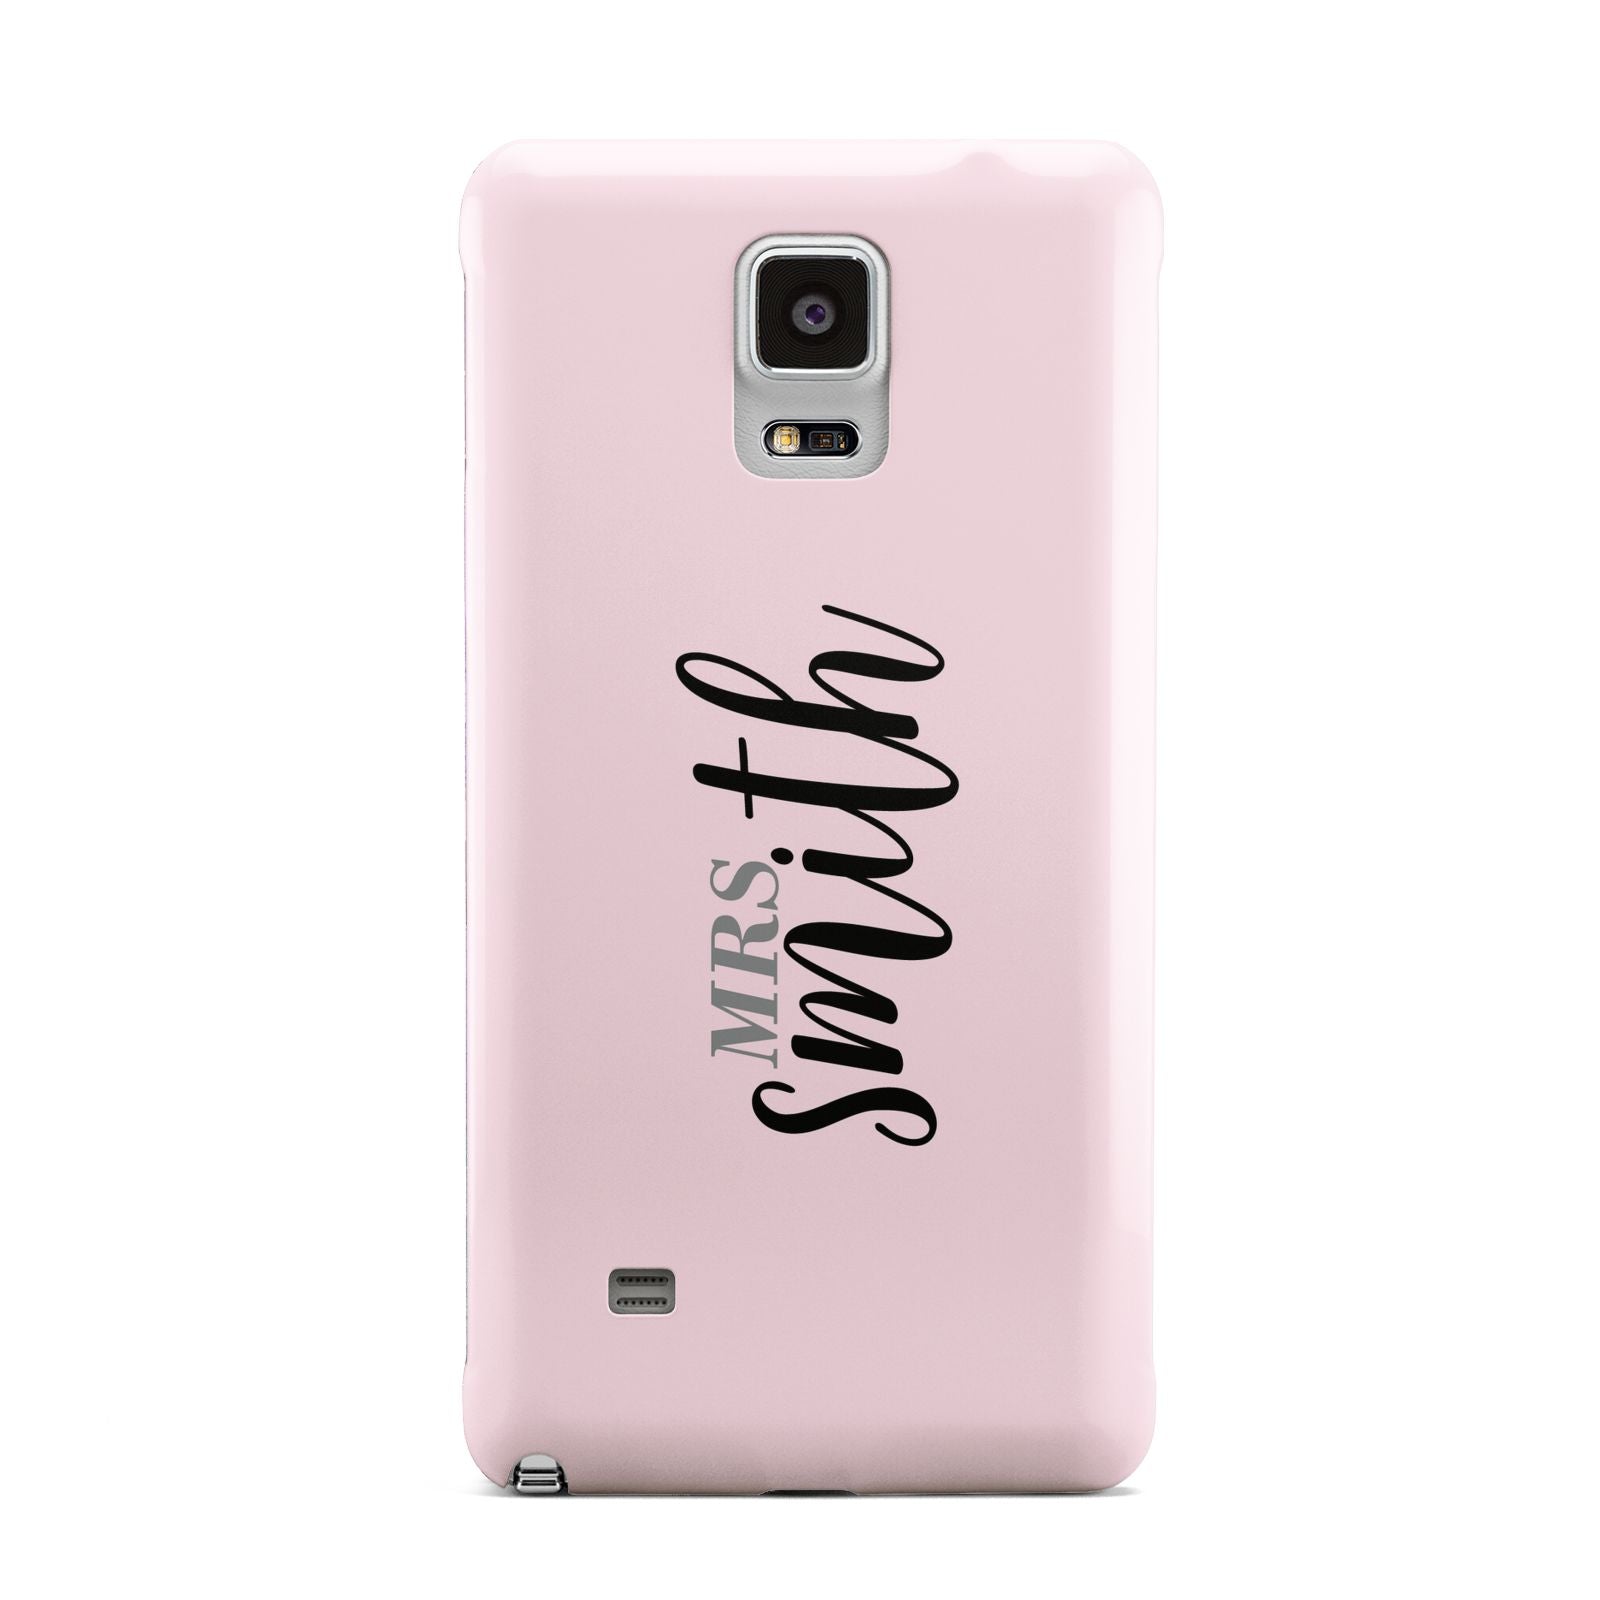 Personalised Bridal Samsung Galaxy Note 4 Case